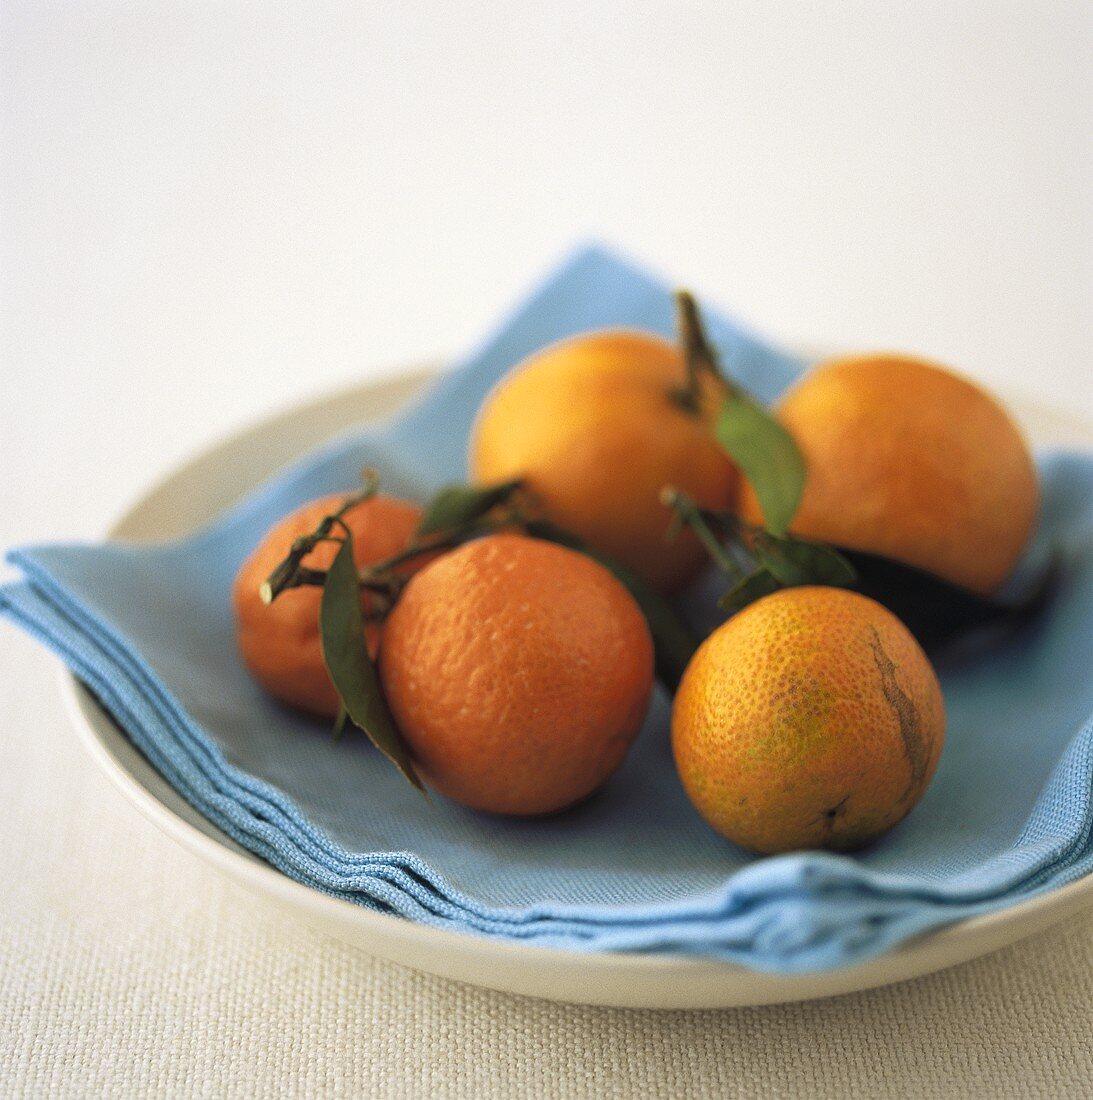 Blood oranges and mandarins on plate